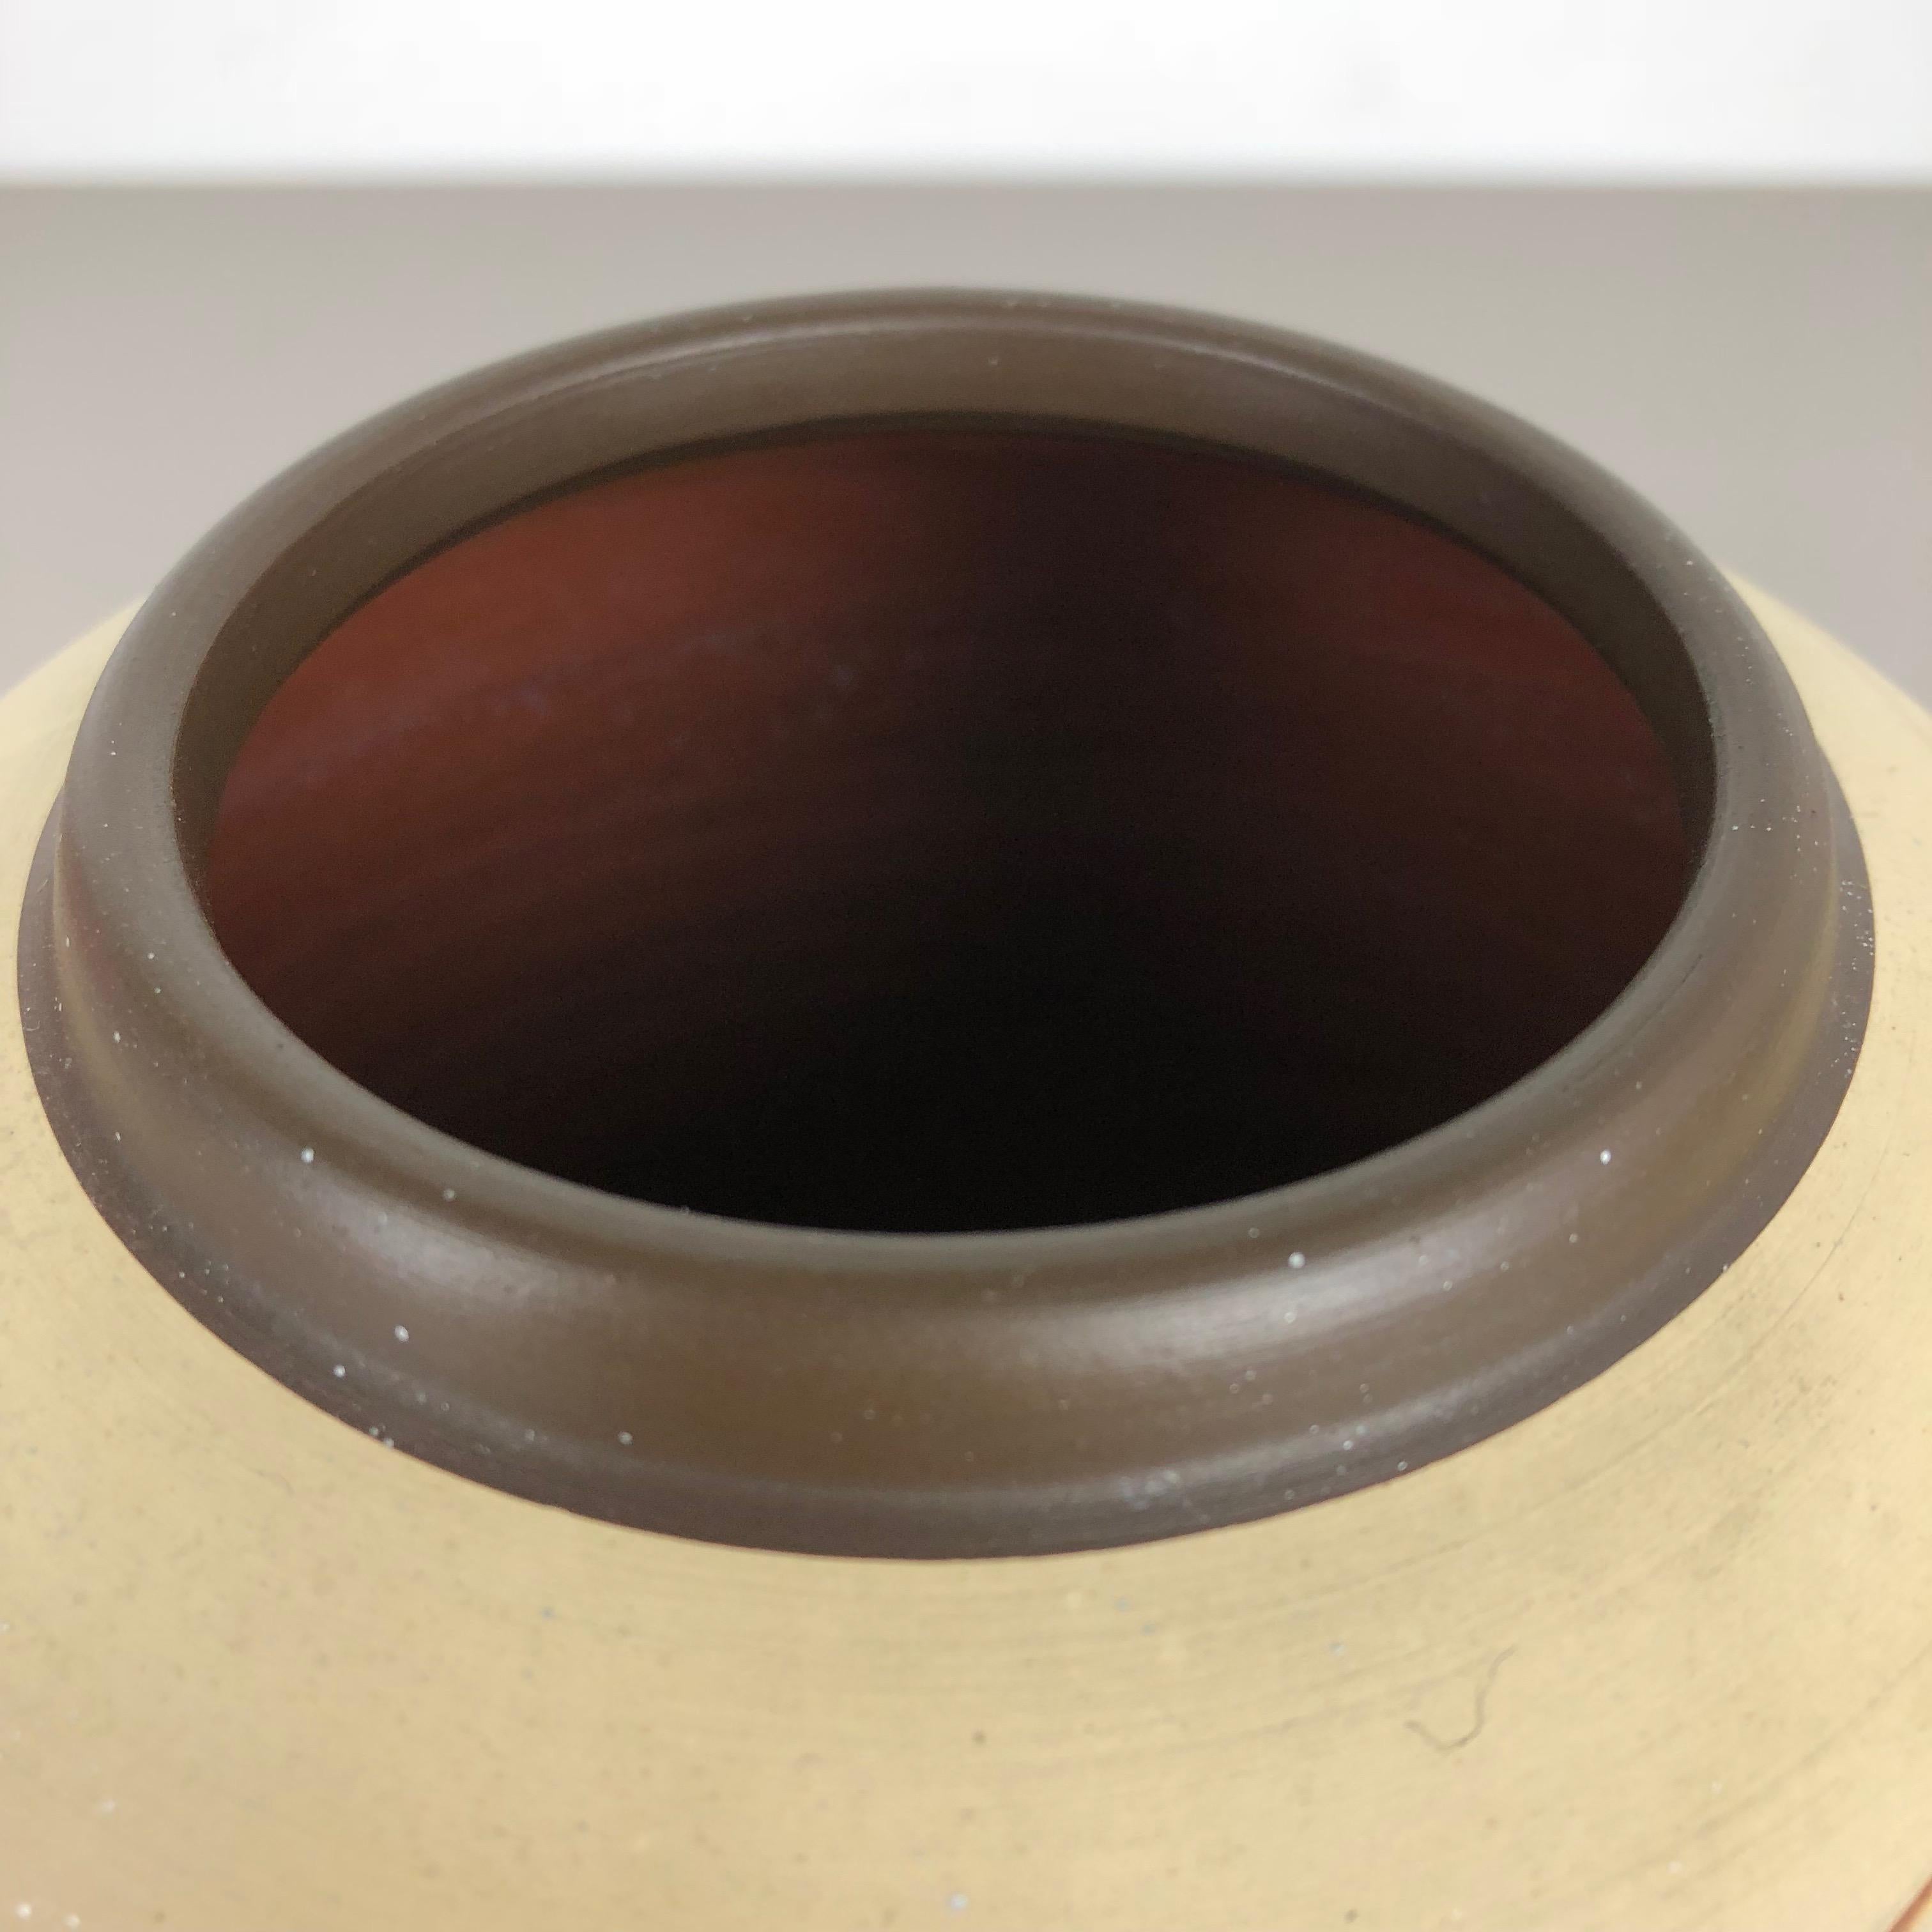 Mid-Century Modern Vintage 1960s Ceramic Pottery Vase by Sawa Ceramic Franz Schwaderlapp, Germany For Sale